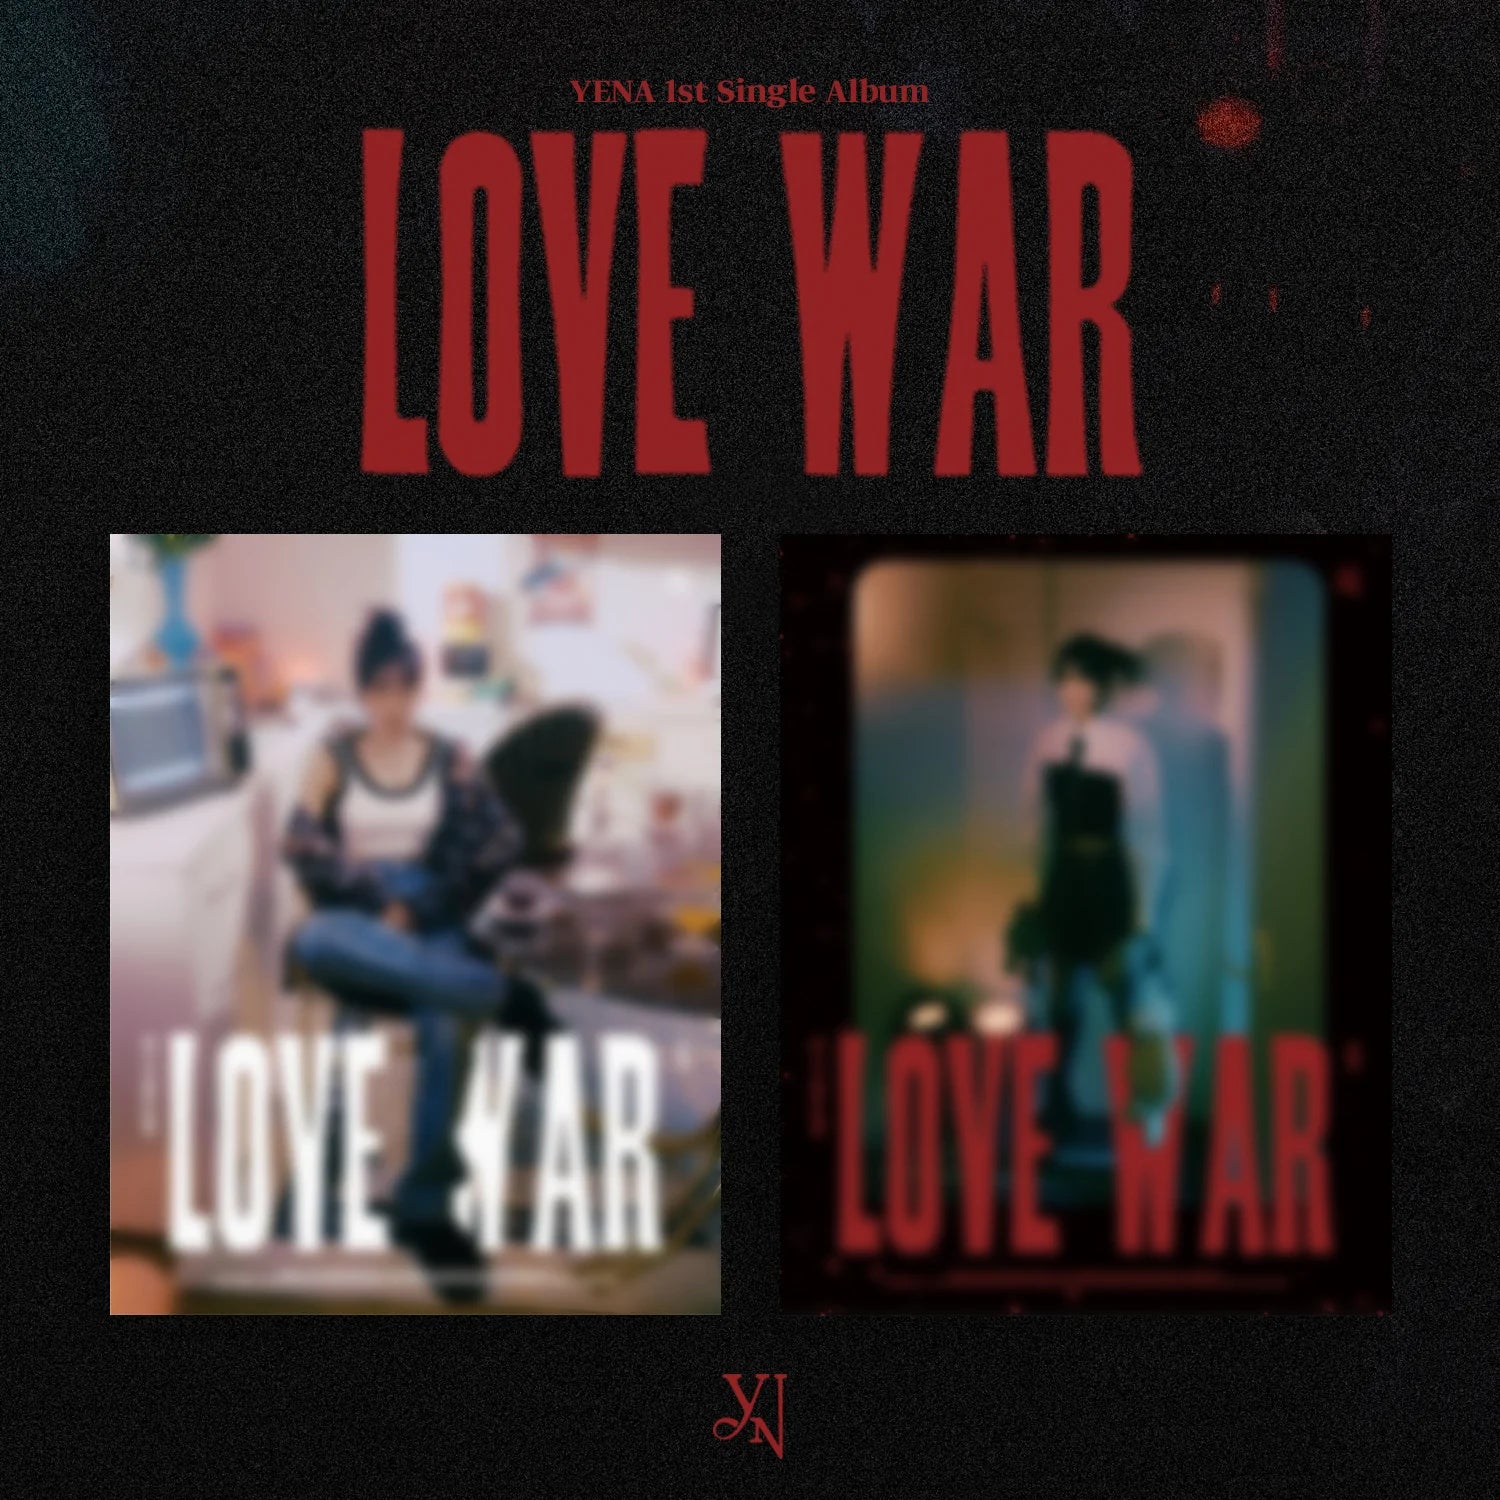 YENA 1ST SINGLE ALBUM 'LOVE WAR' COVER